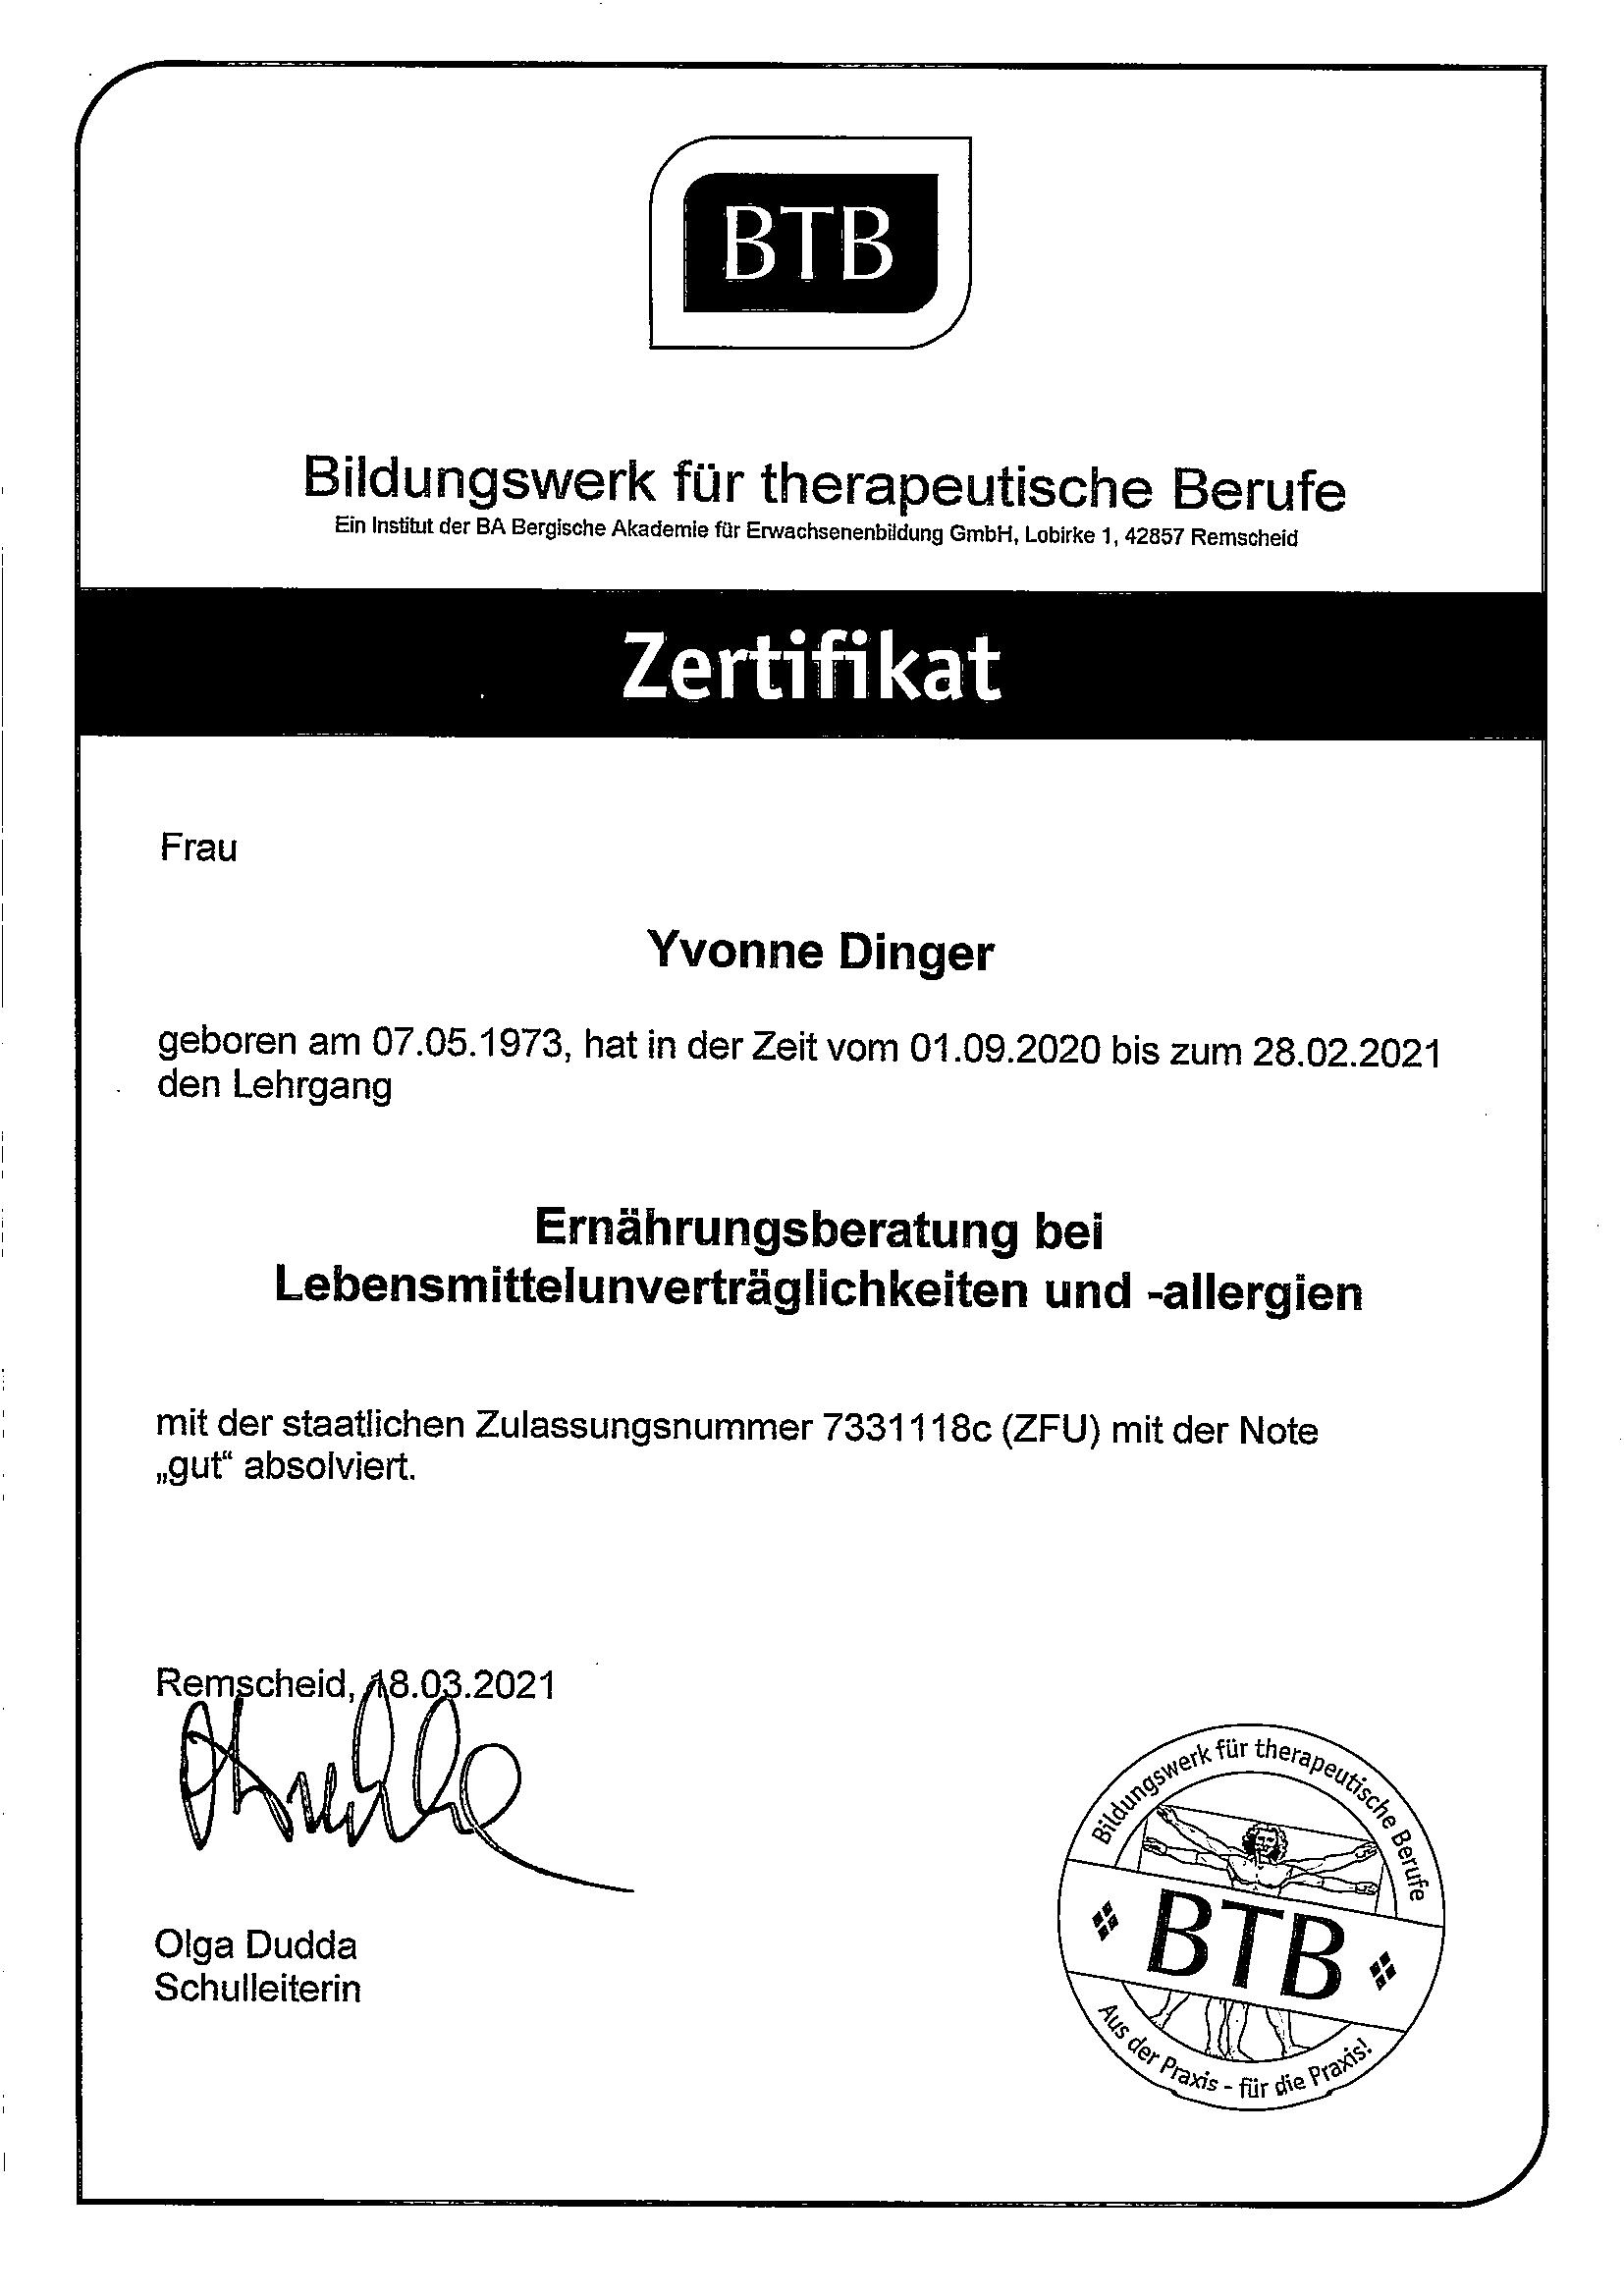 Zertifikat Ernährungsberatung Yvonne Dinger Lebensmittelunverträglichkeit